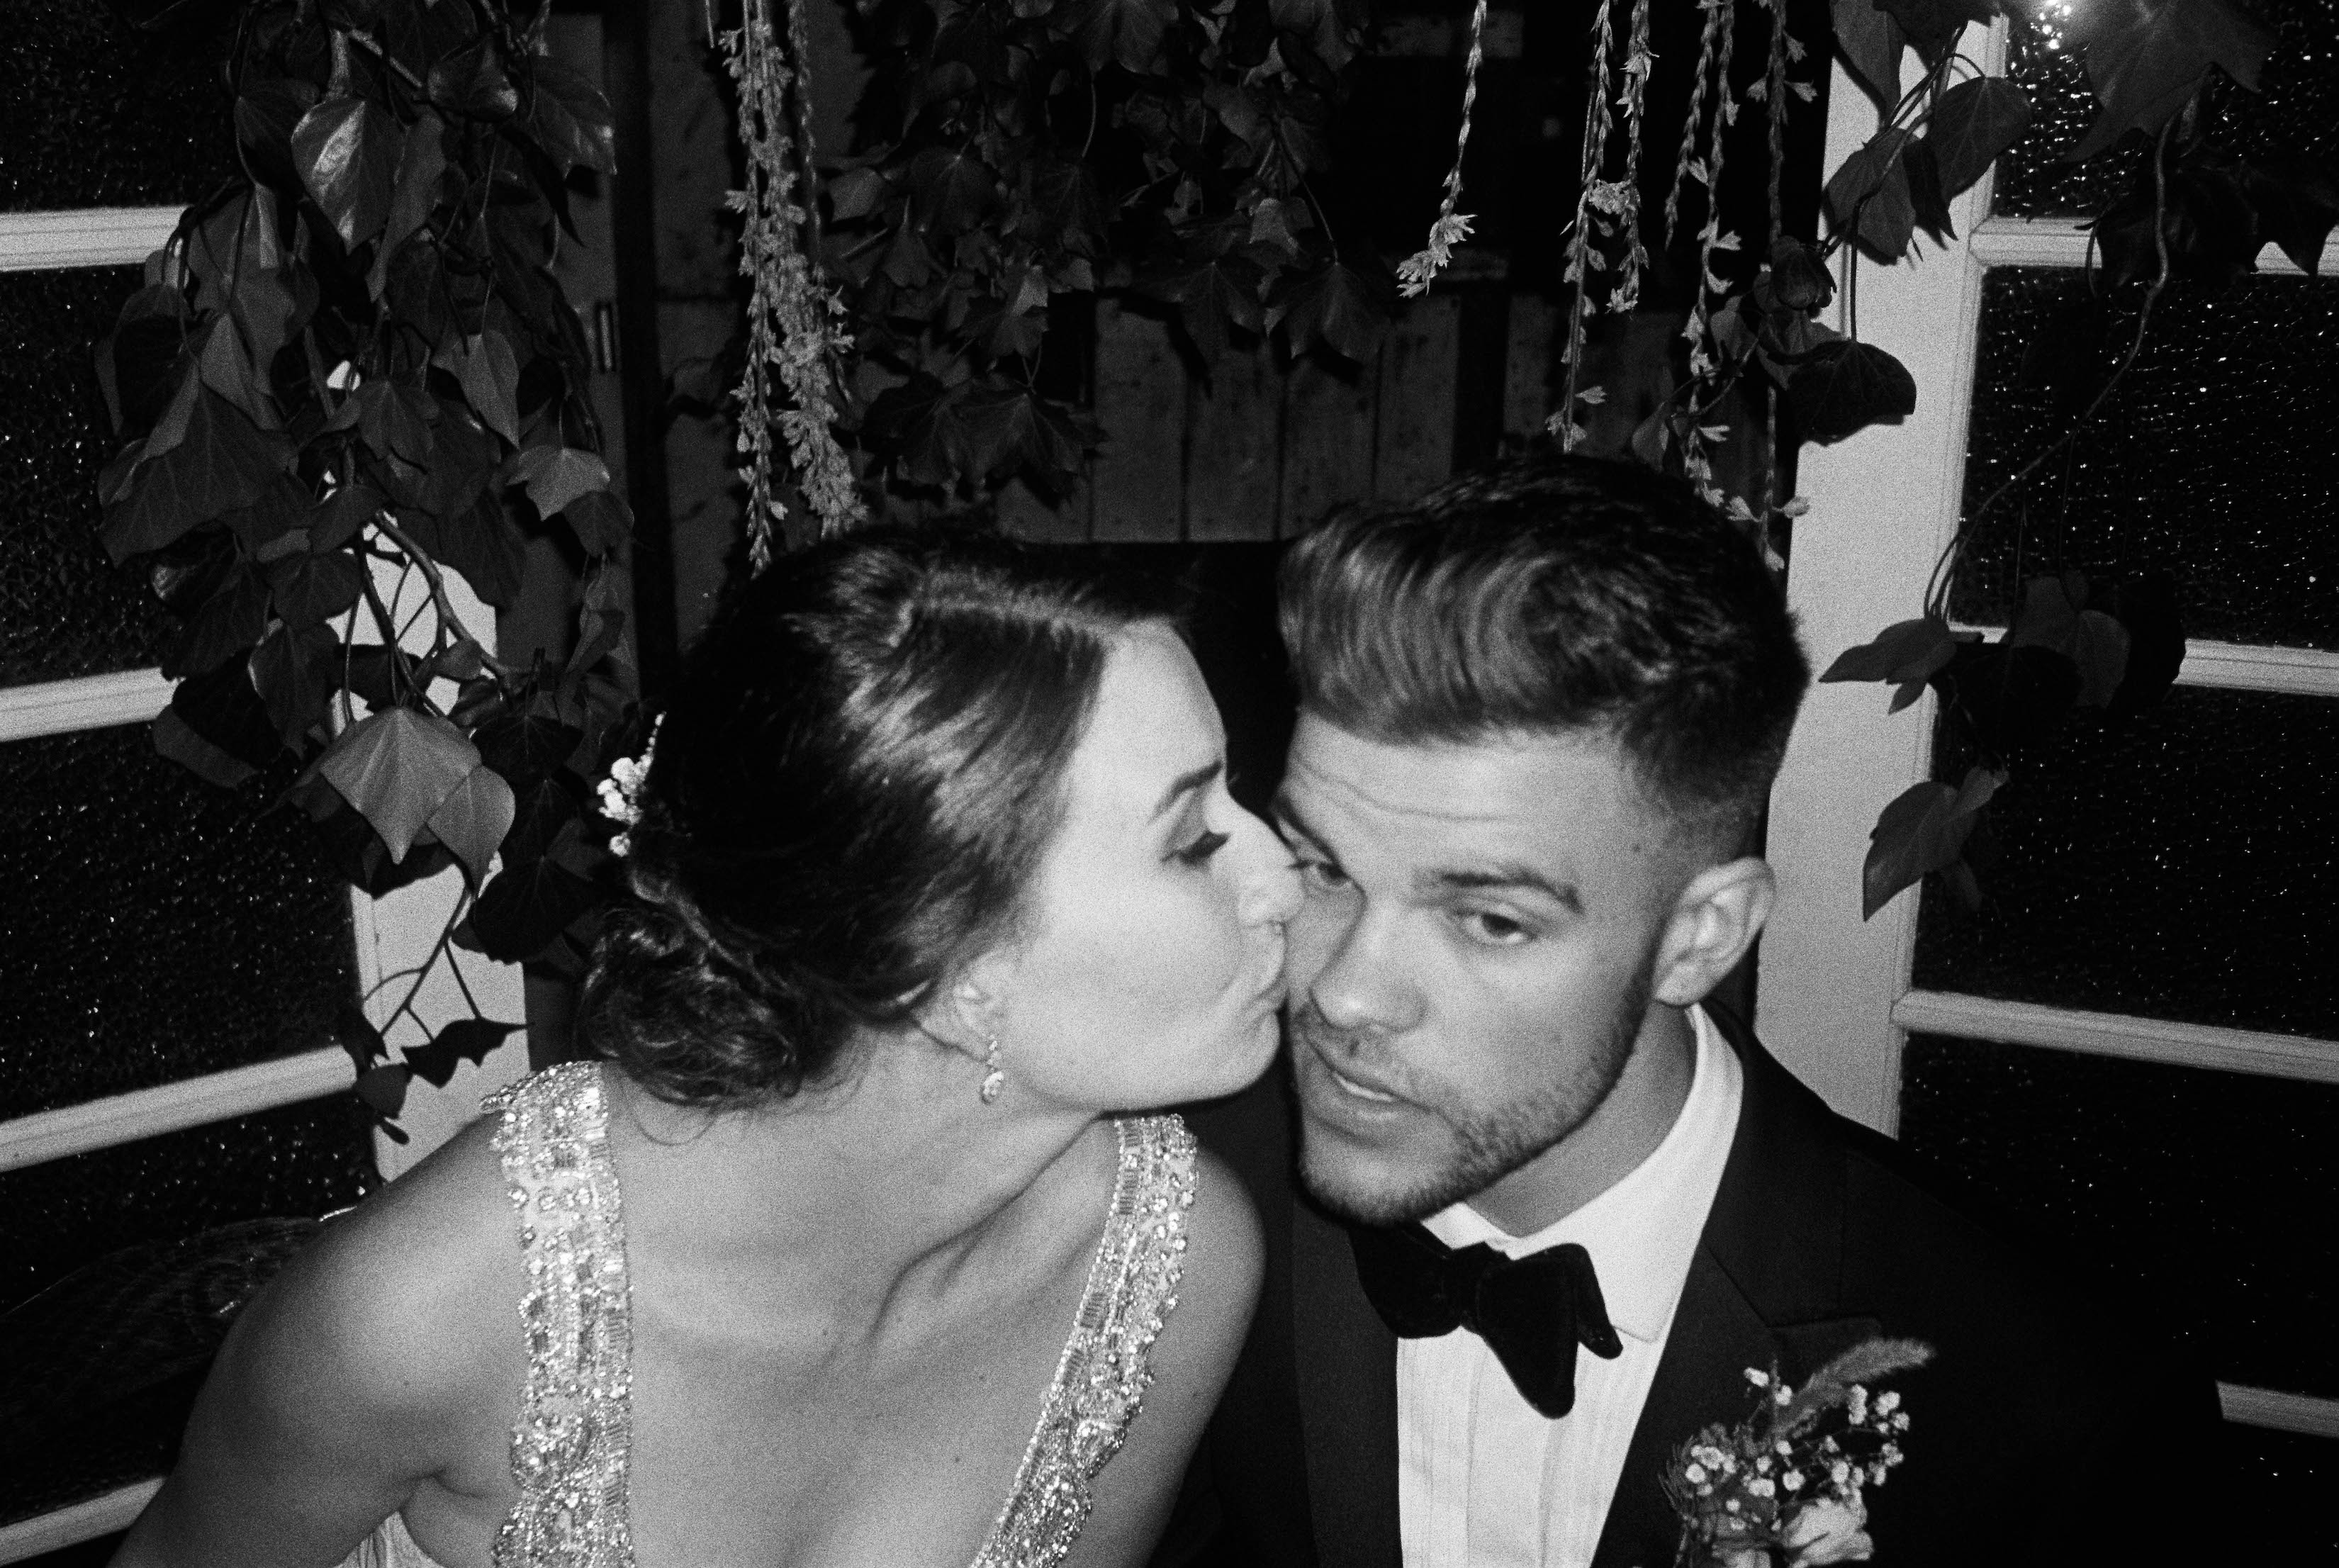 A fun black & white film wedding photo of the bride & groom during their wedding reception